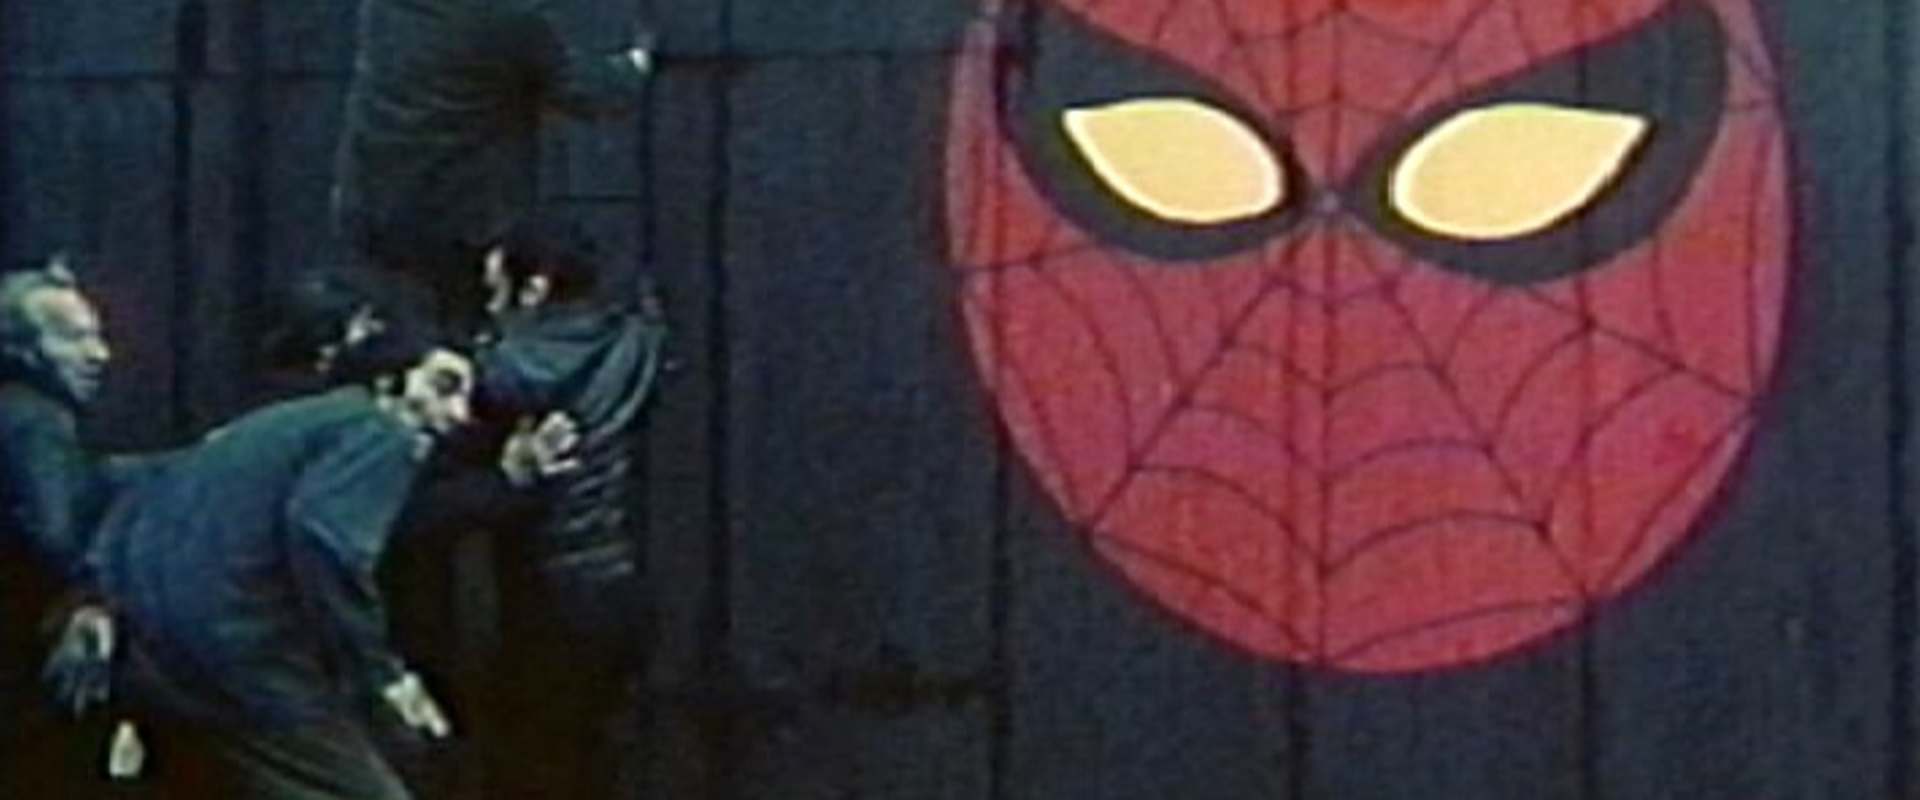 Spider-Man Versus Kraven the Hunter background 1